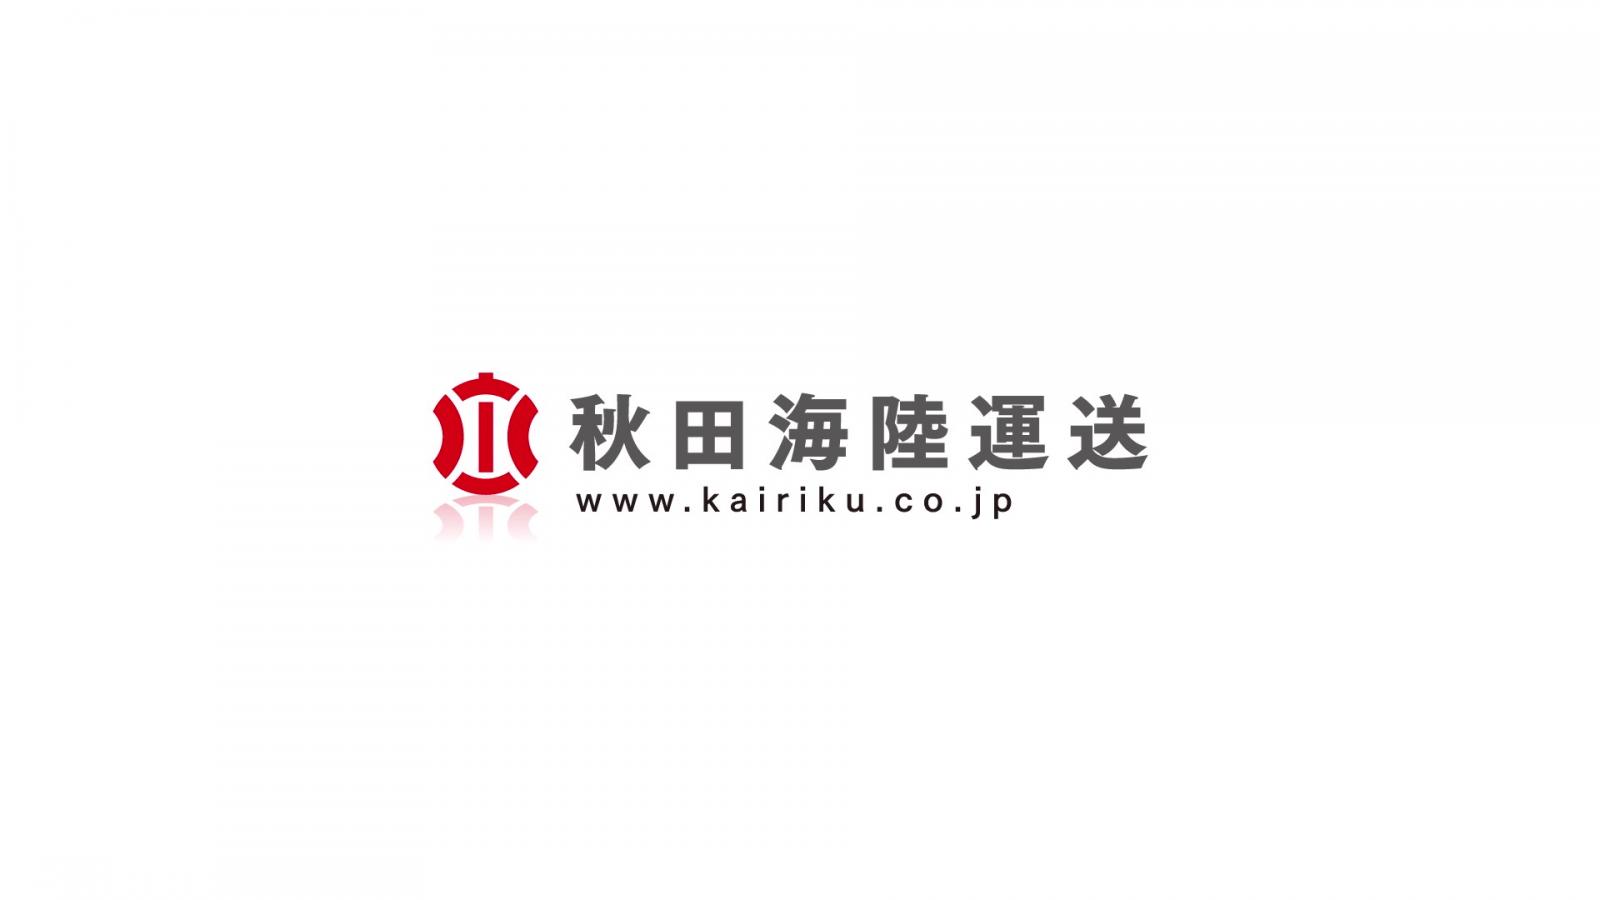 ロゴ:秋田海陸運送株式会社